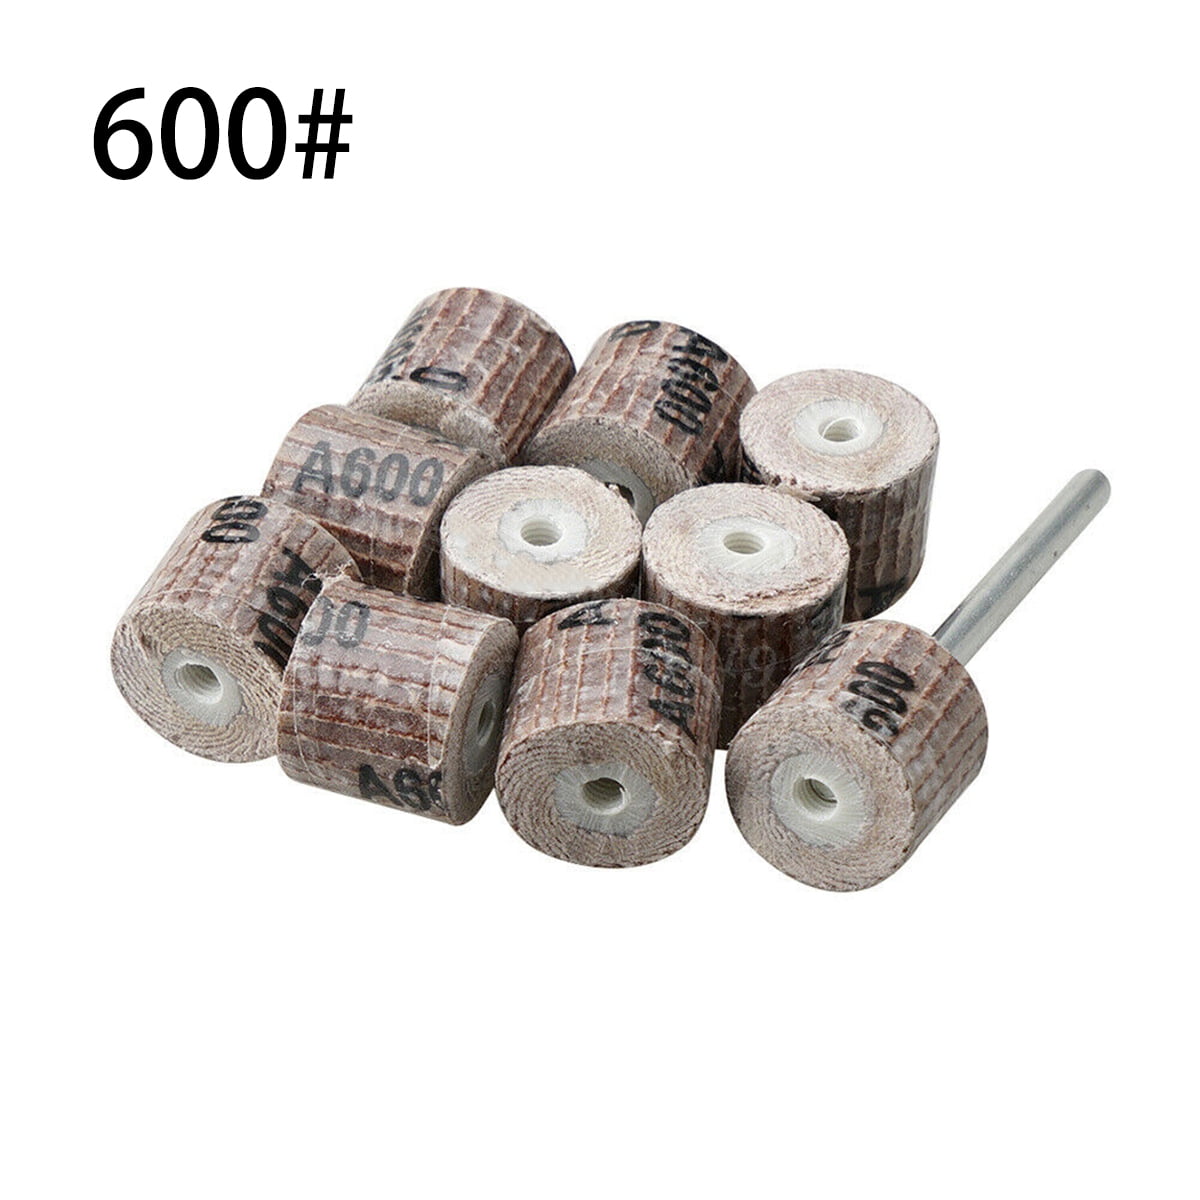 10pcs 600# Grit Sanding Grinding Flap Wheel Disc Sandpaper Polishing Rotary Tool 